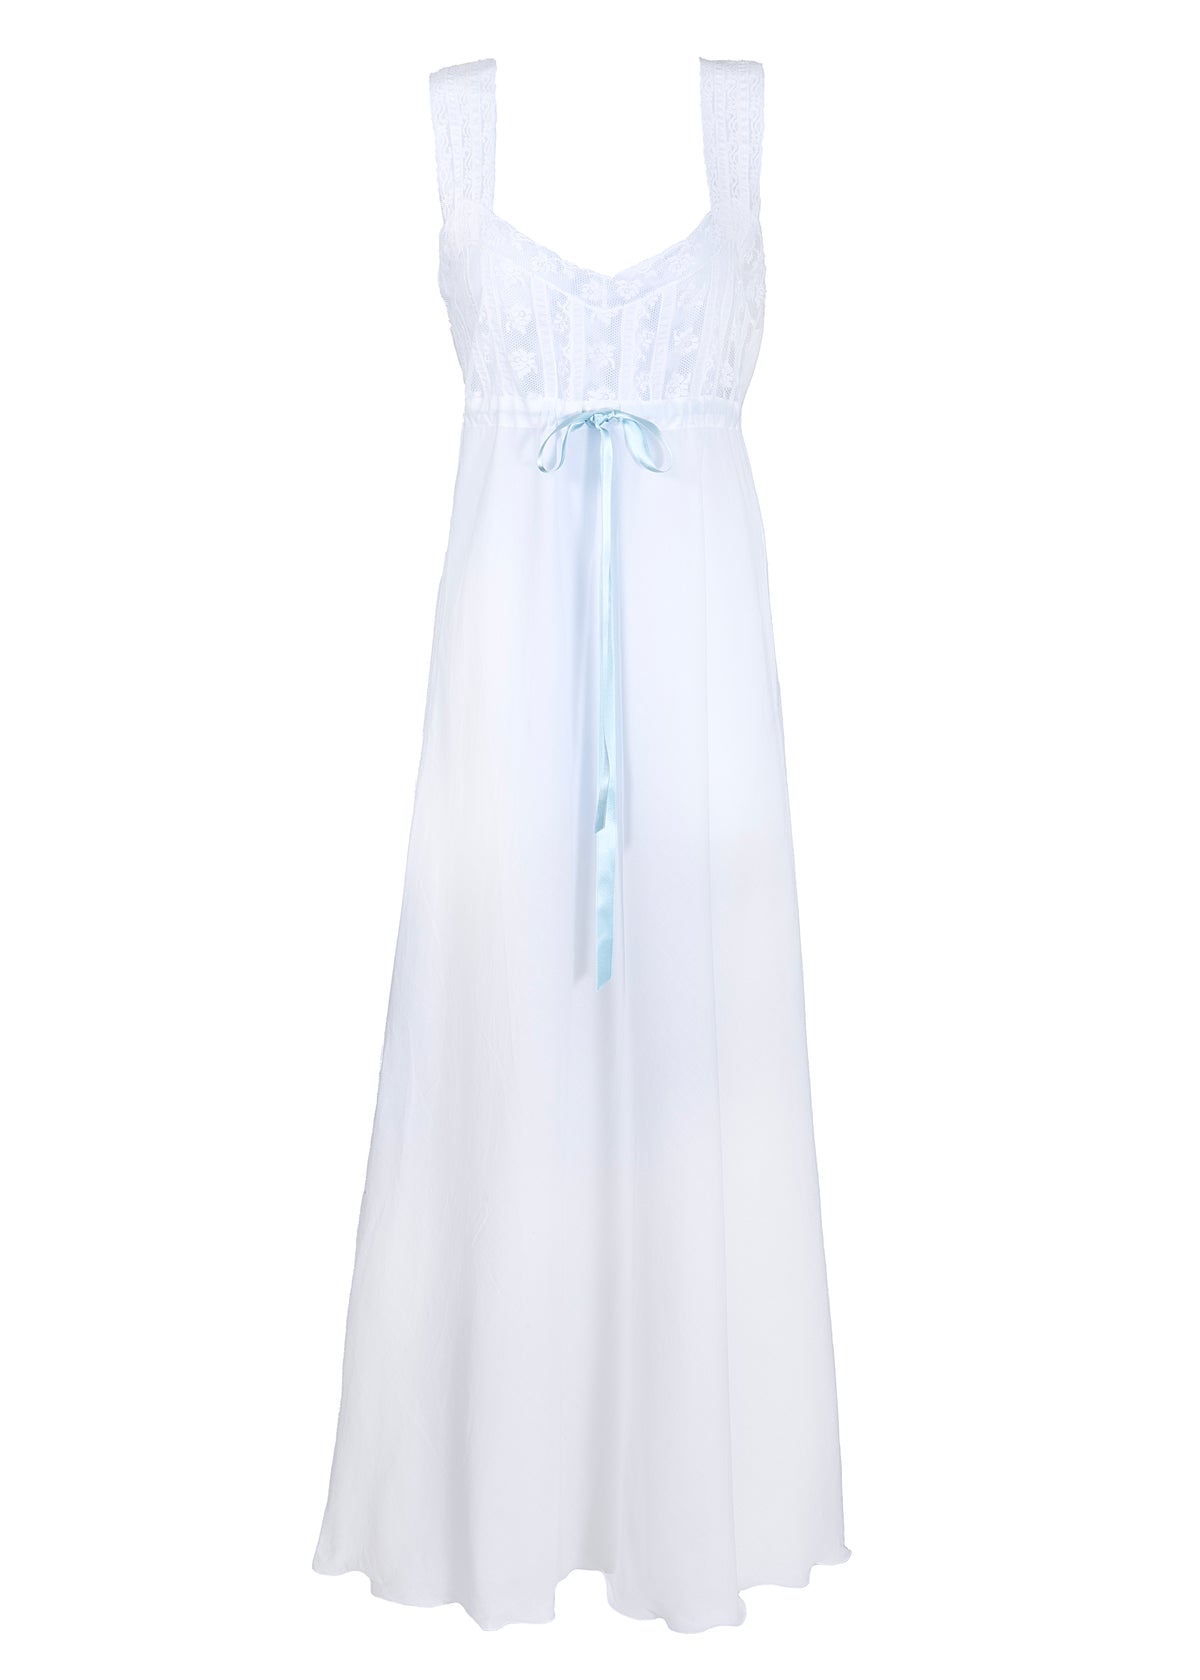 Hoara Cotton Nightgown